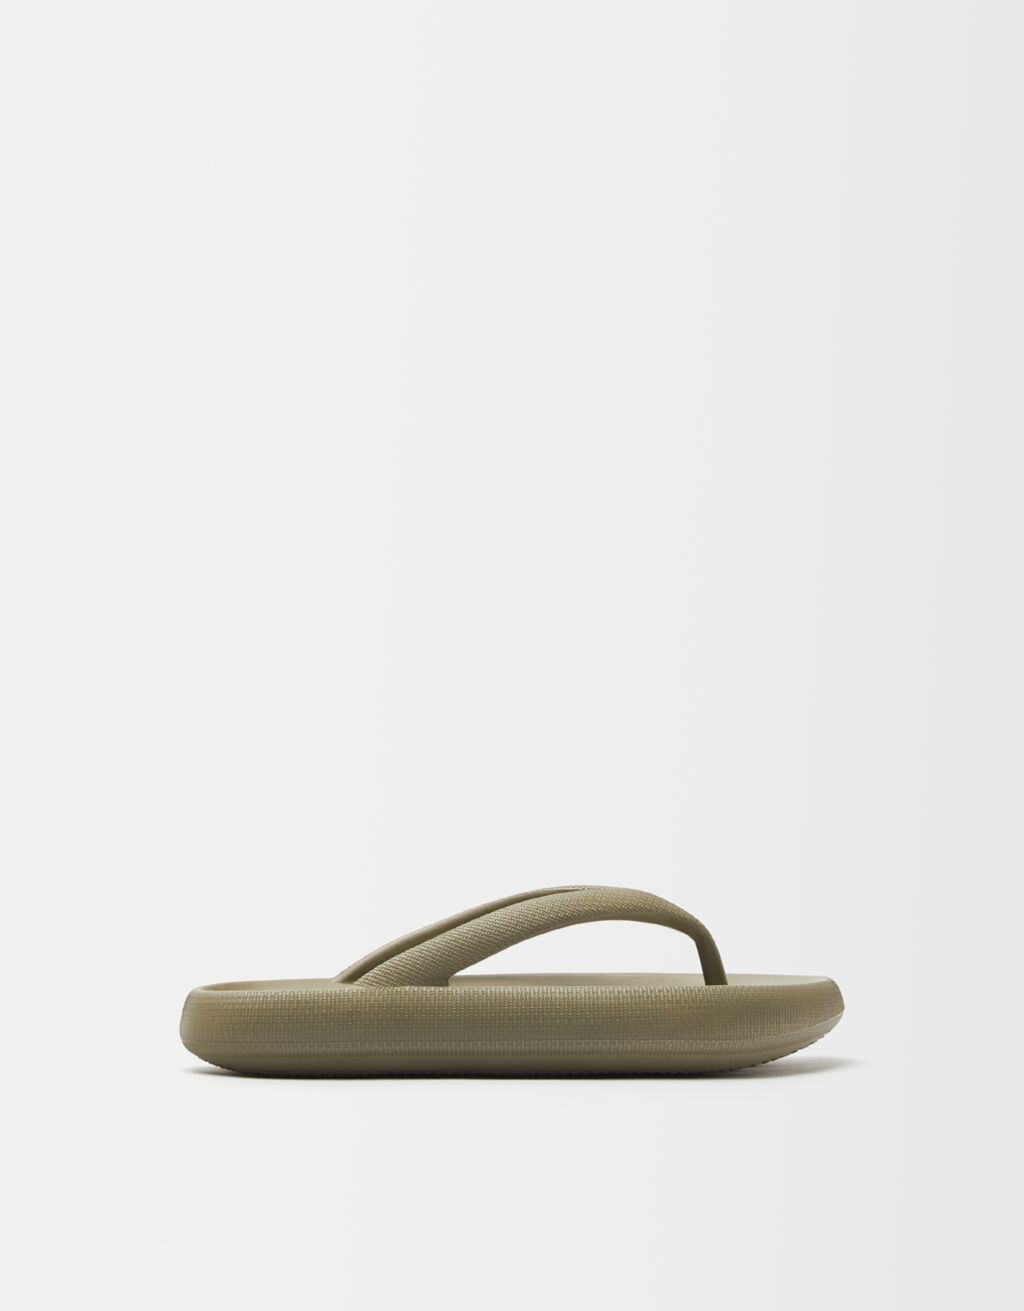 Men’s textured flat sandals